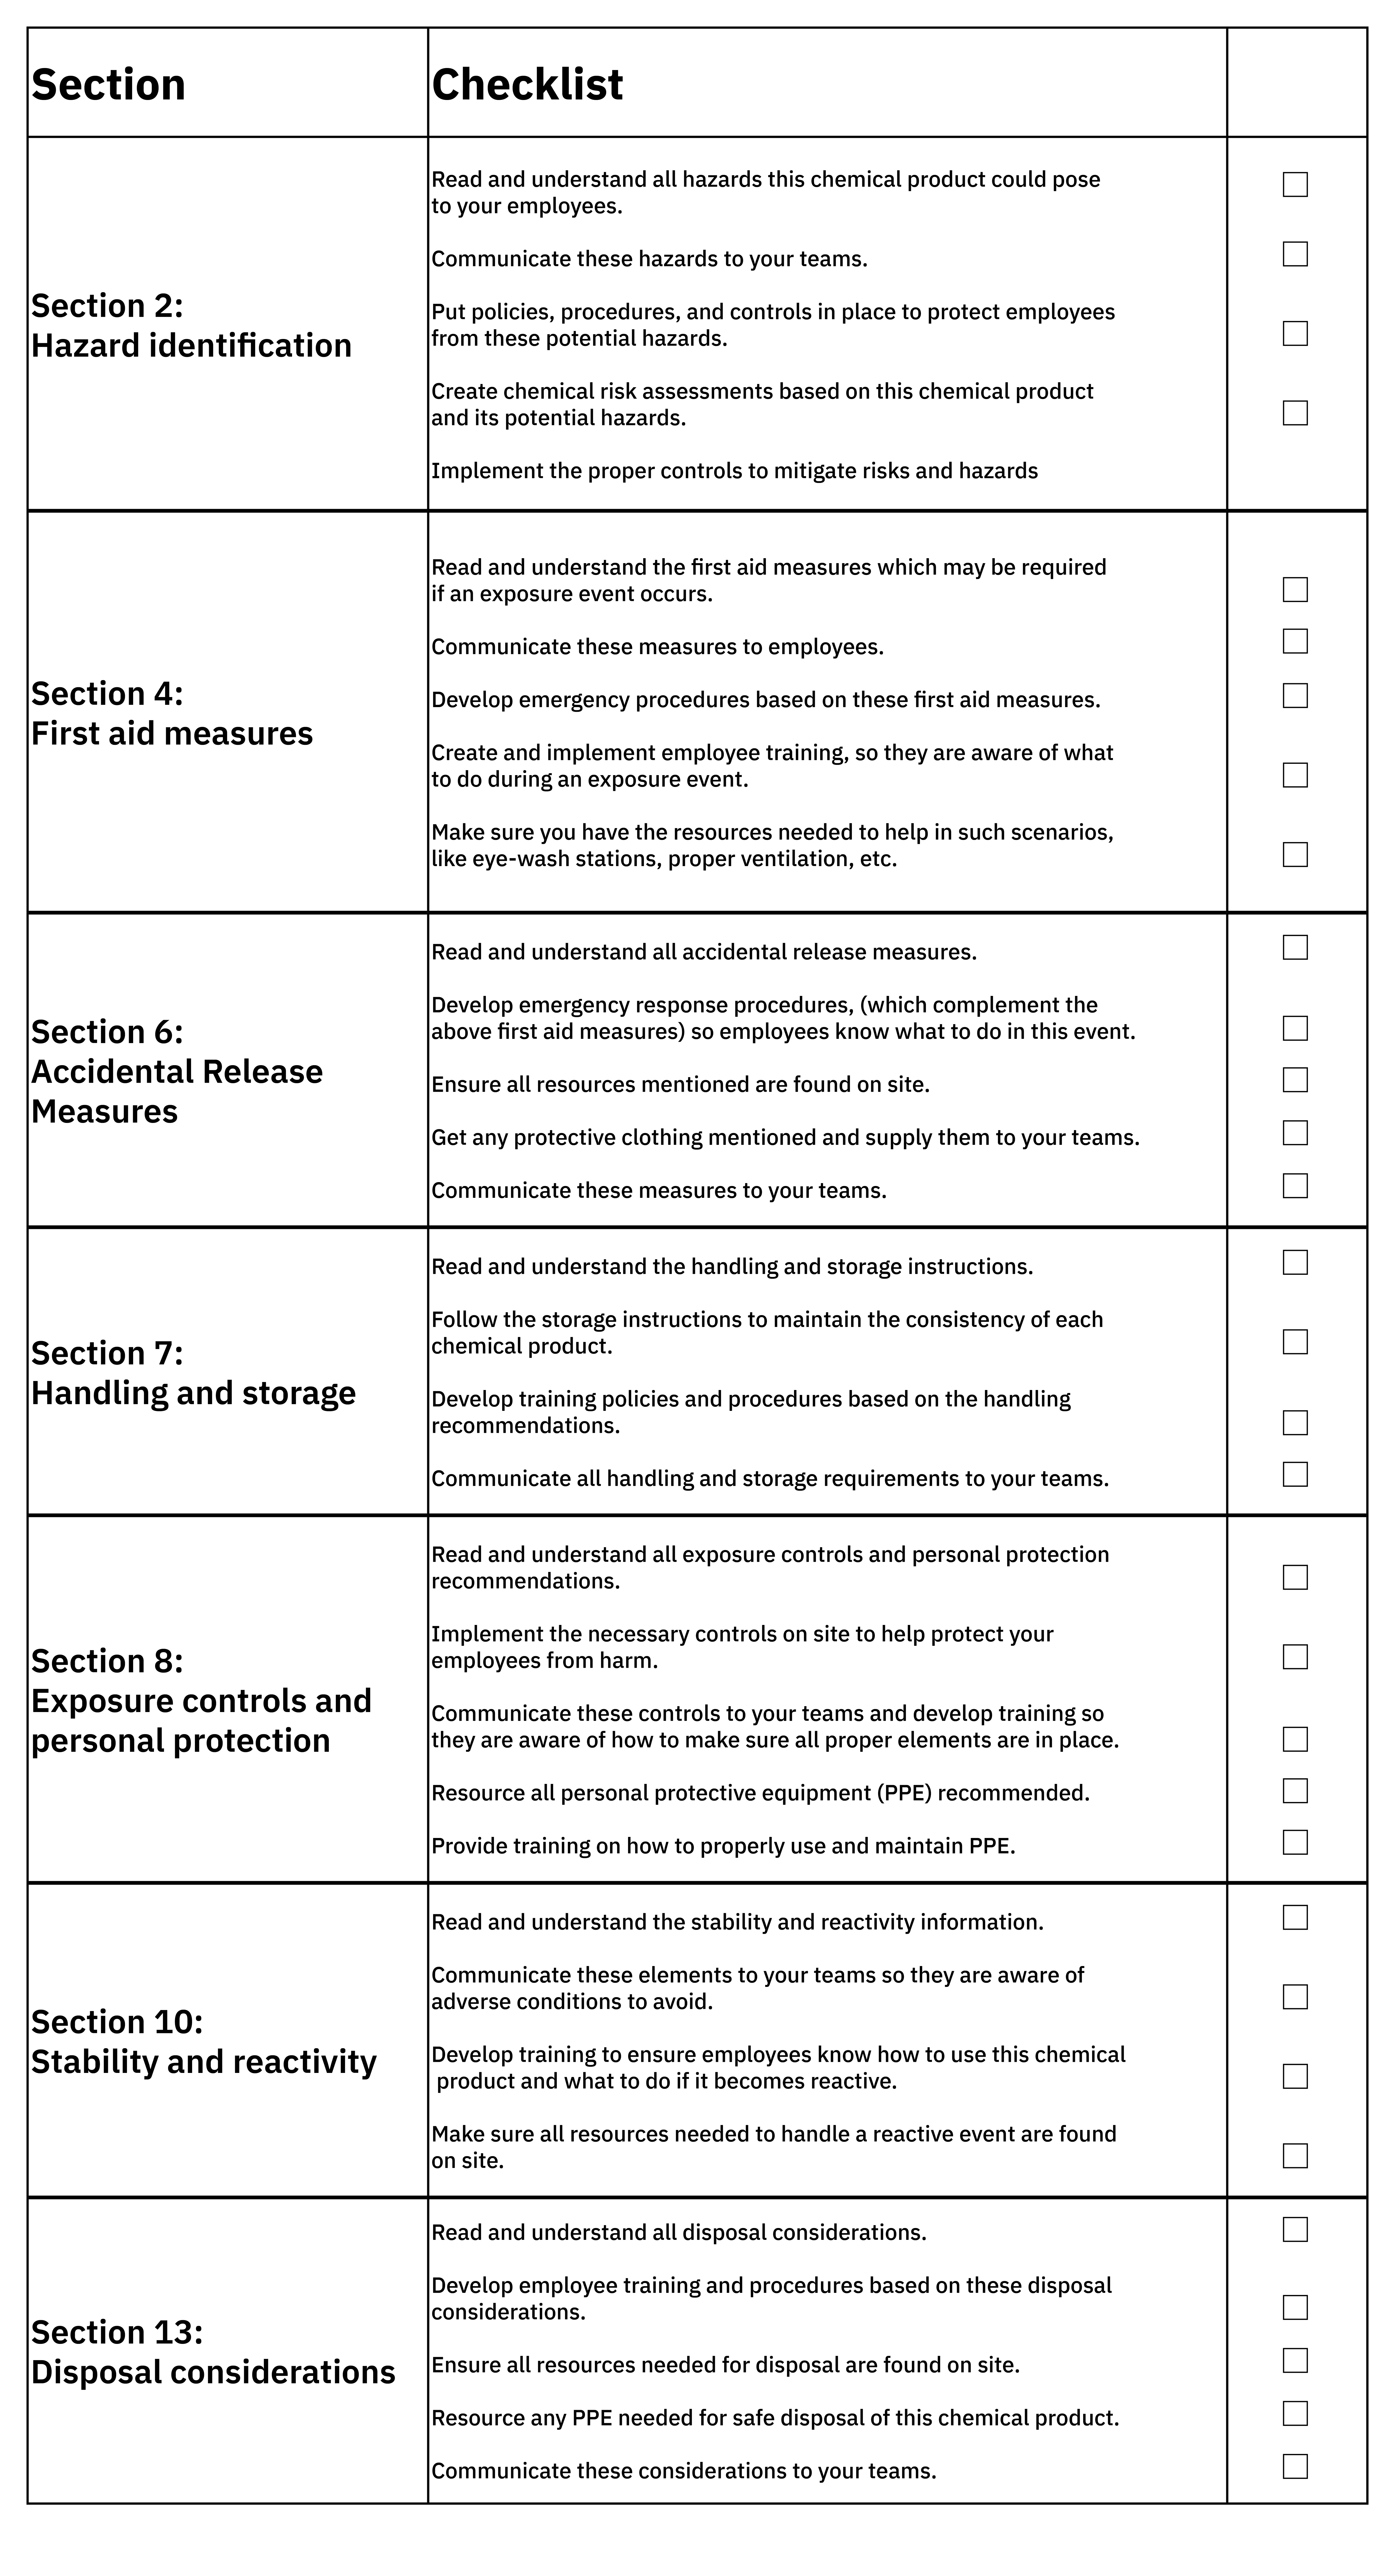 SDS Checklist - UKENG